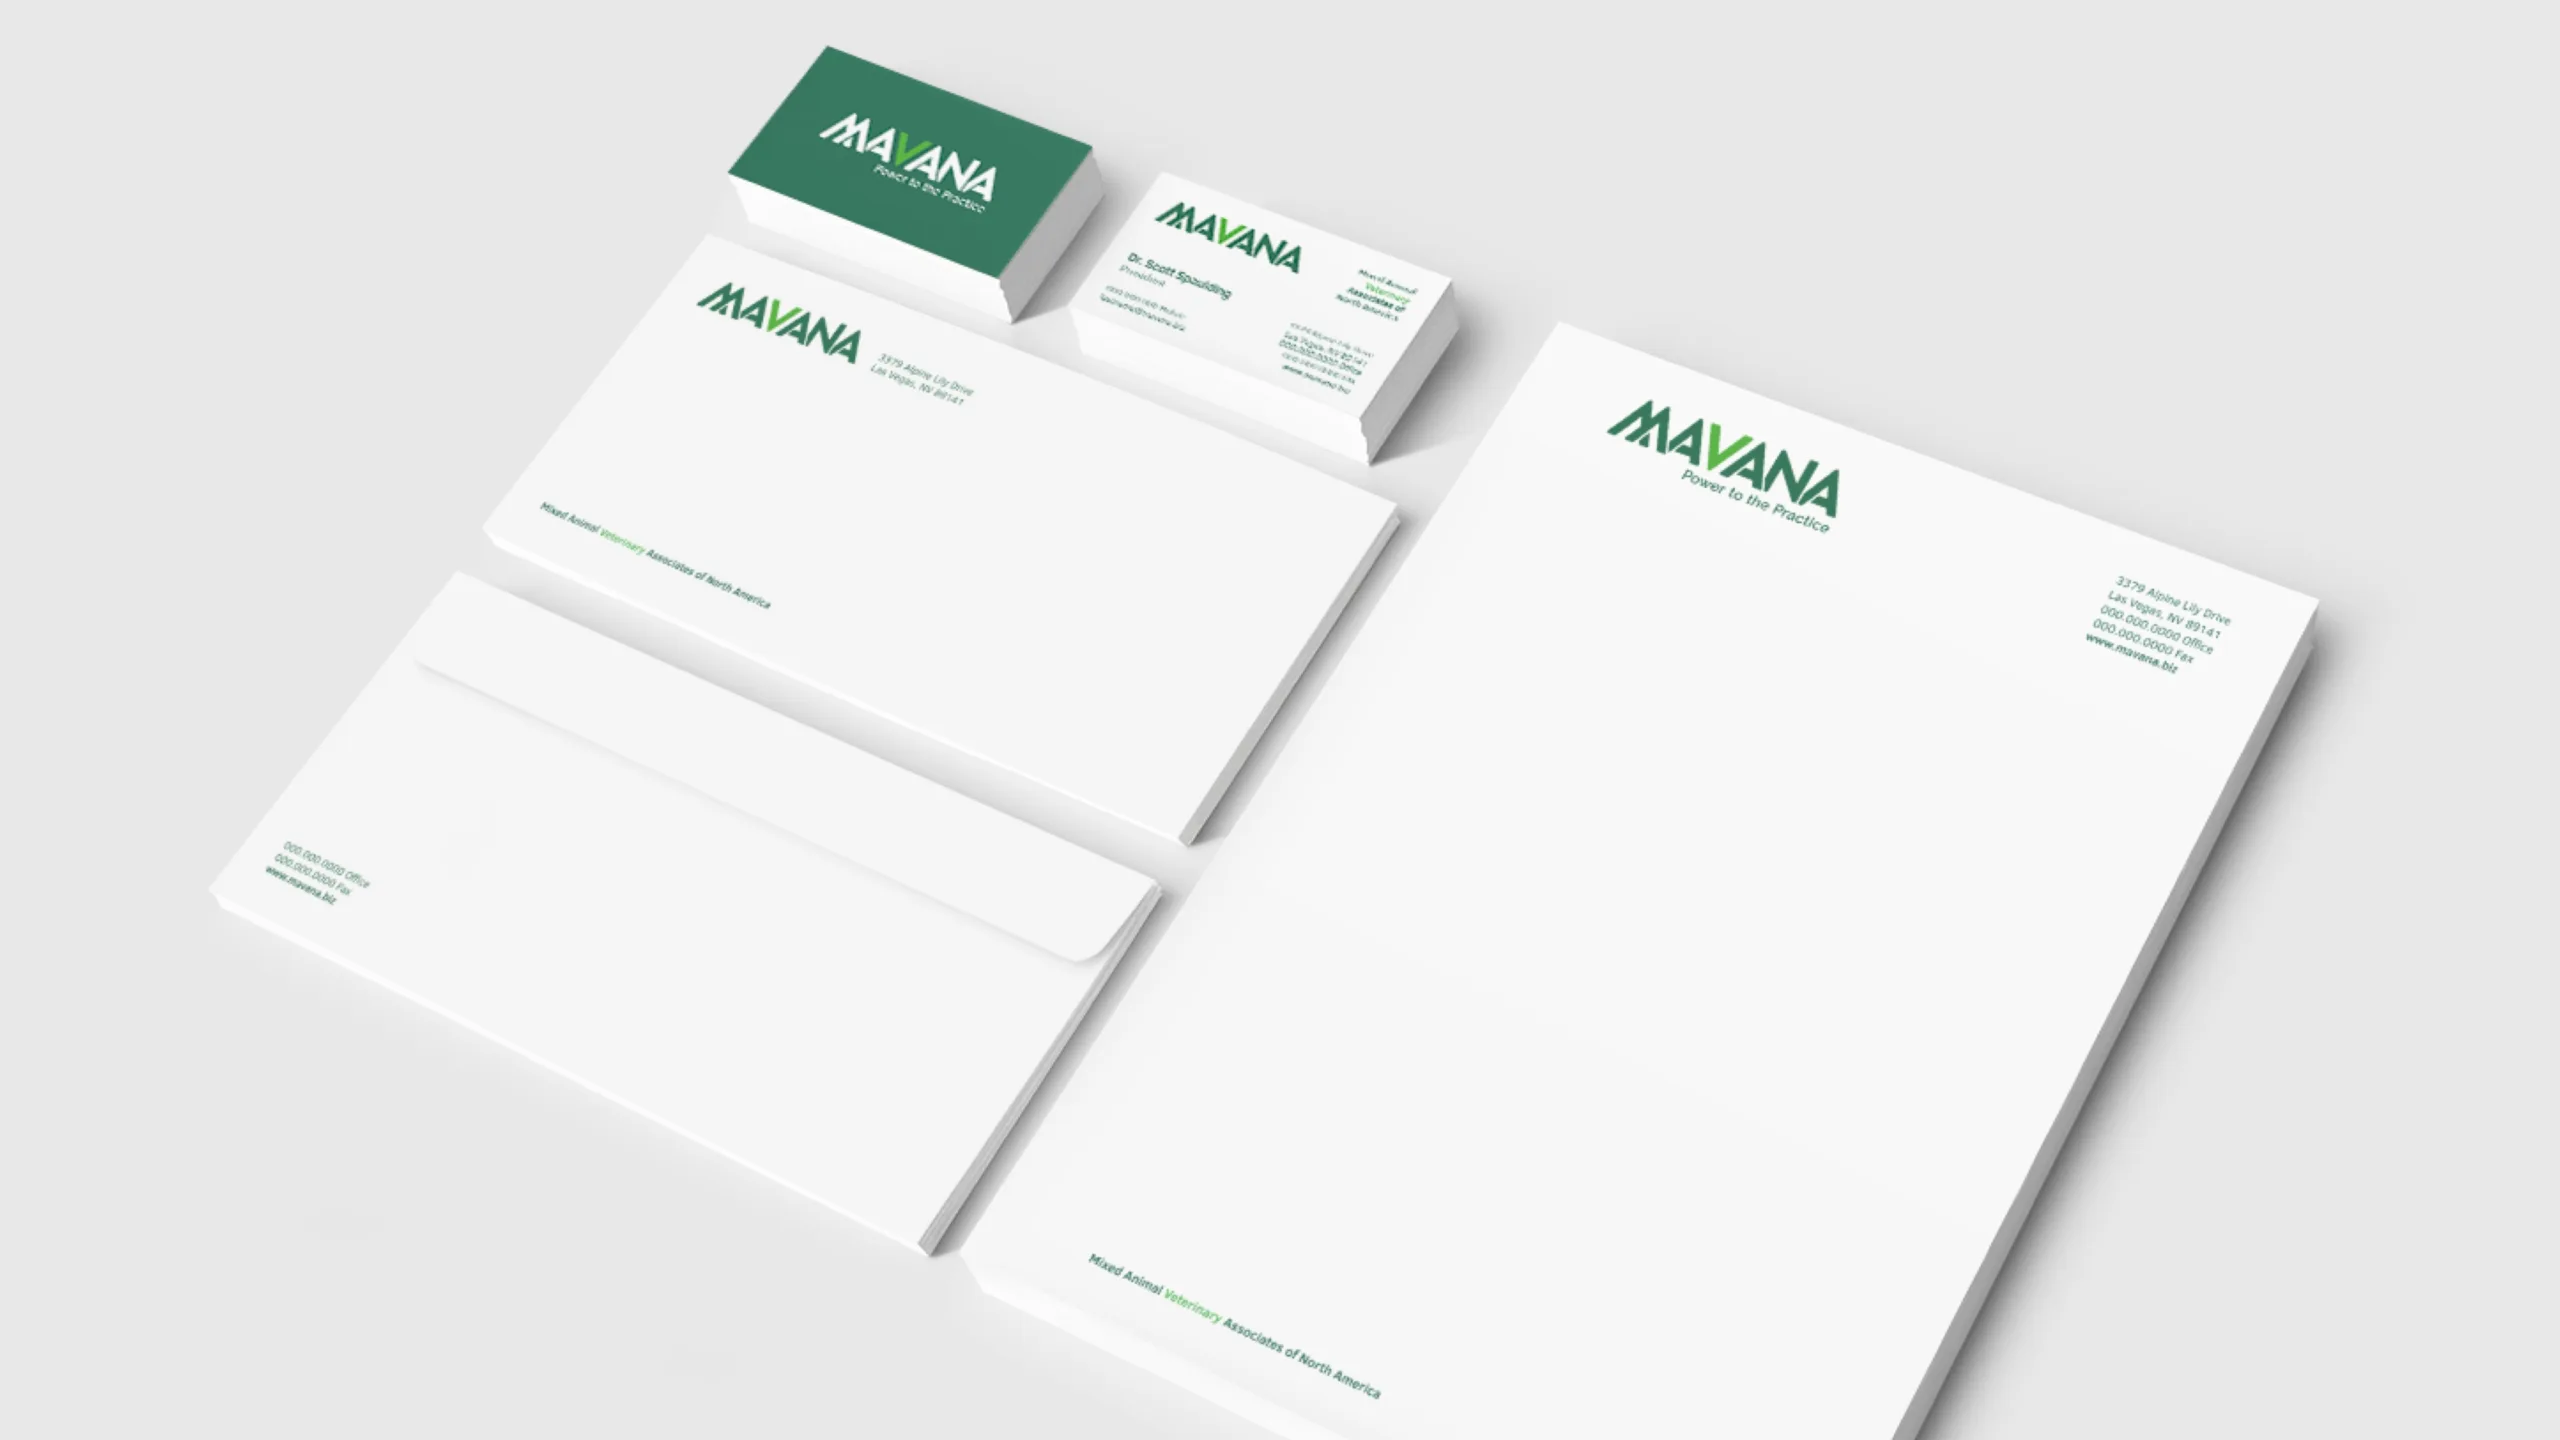 mavana branding and graphic design, marketing and advertising